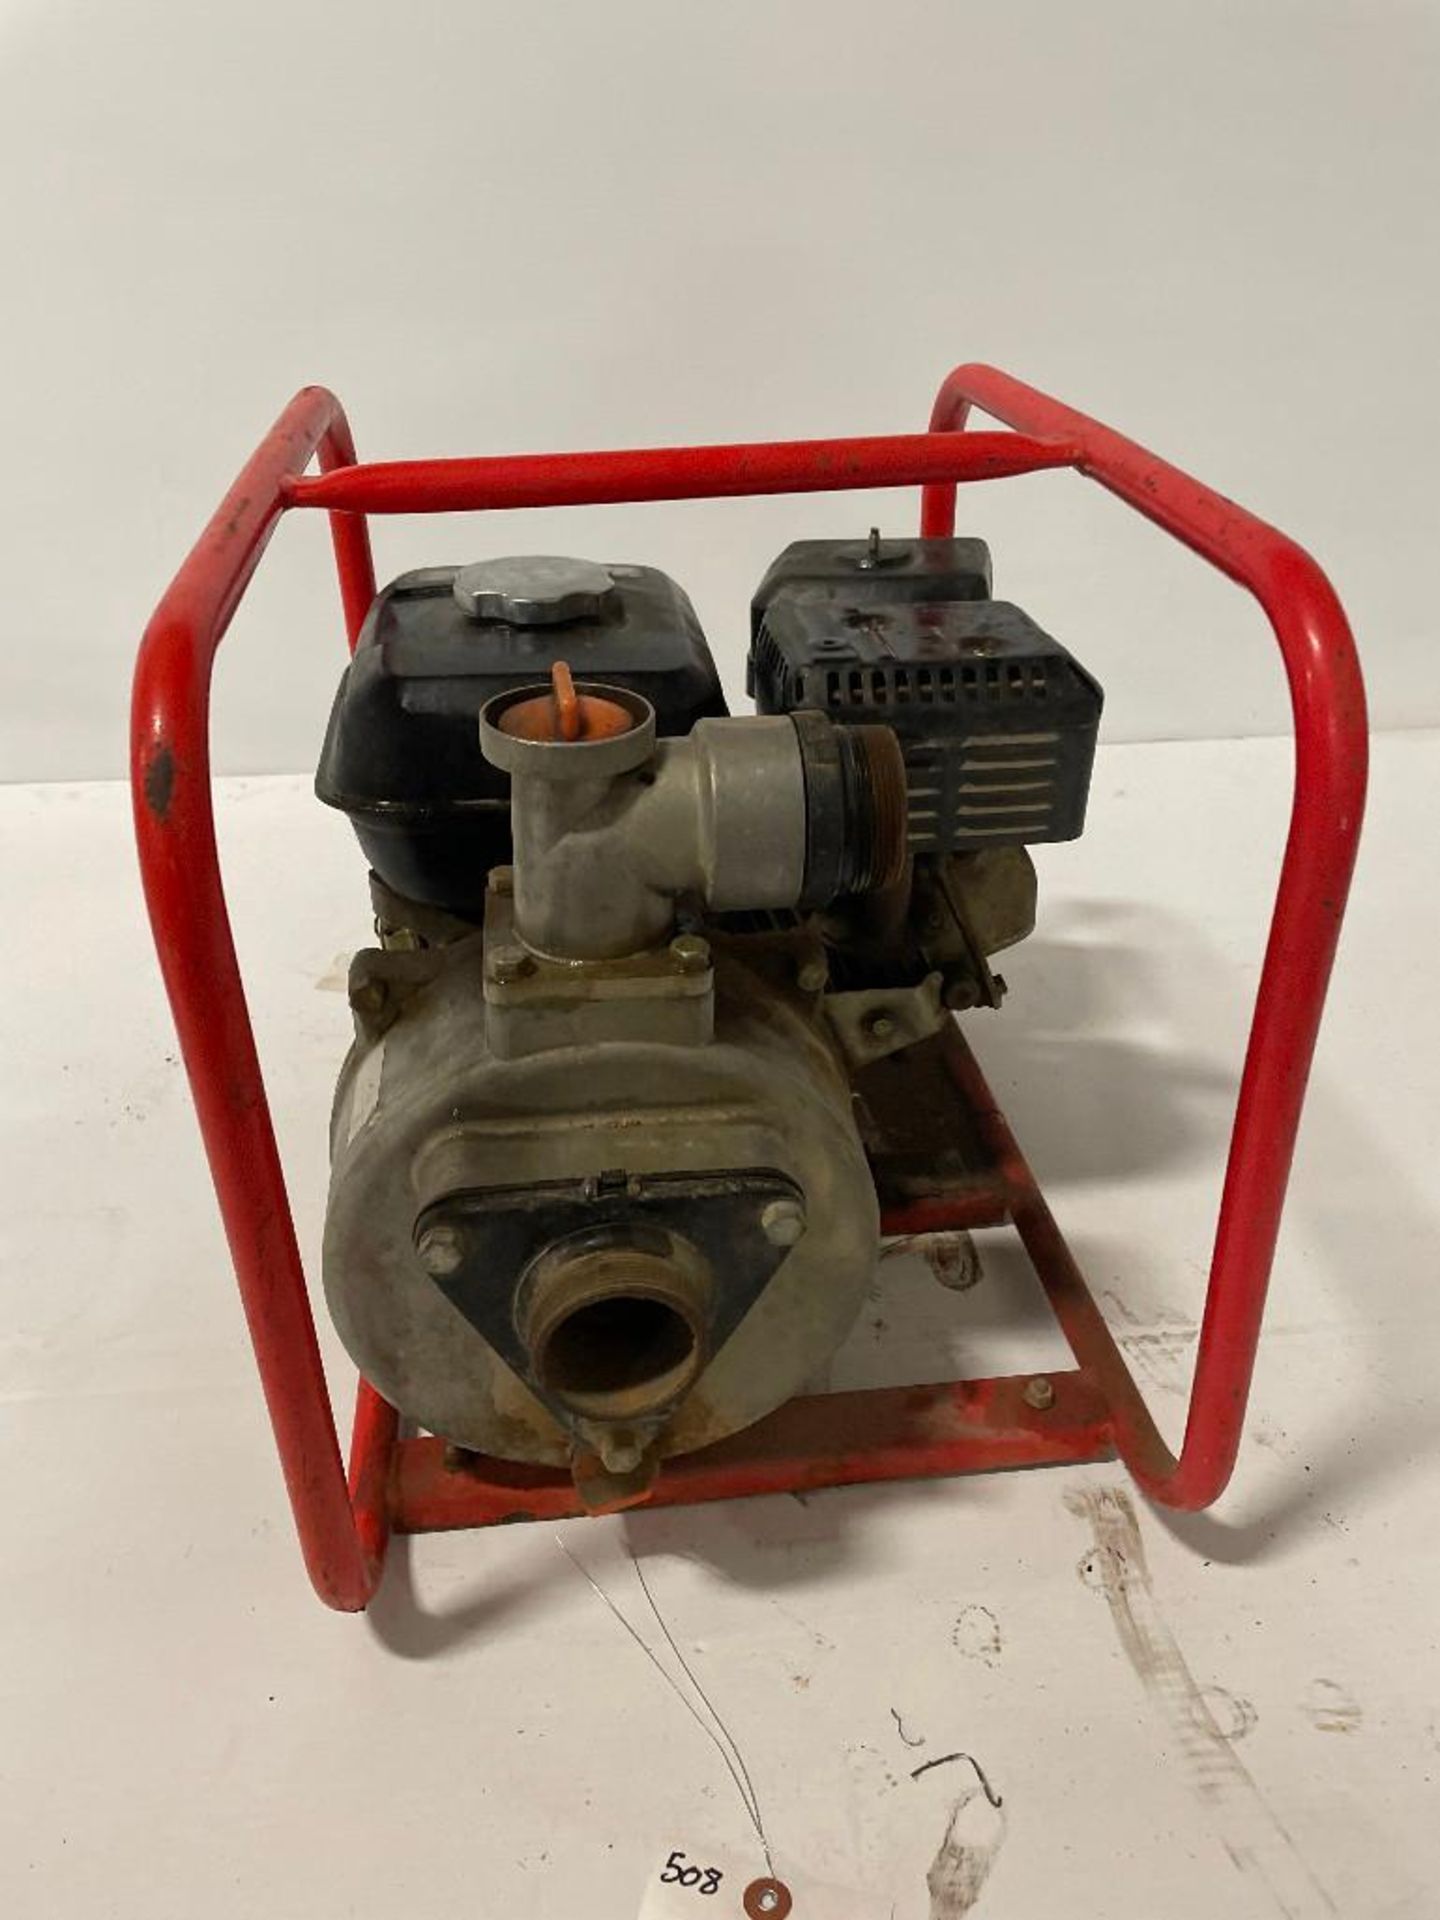 Multiquip Trash Pump, Honda GX120 4.0 Engine. Located in Hazelwood, MO - Image 3 of 5